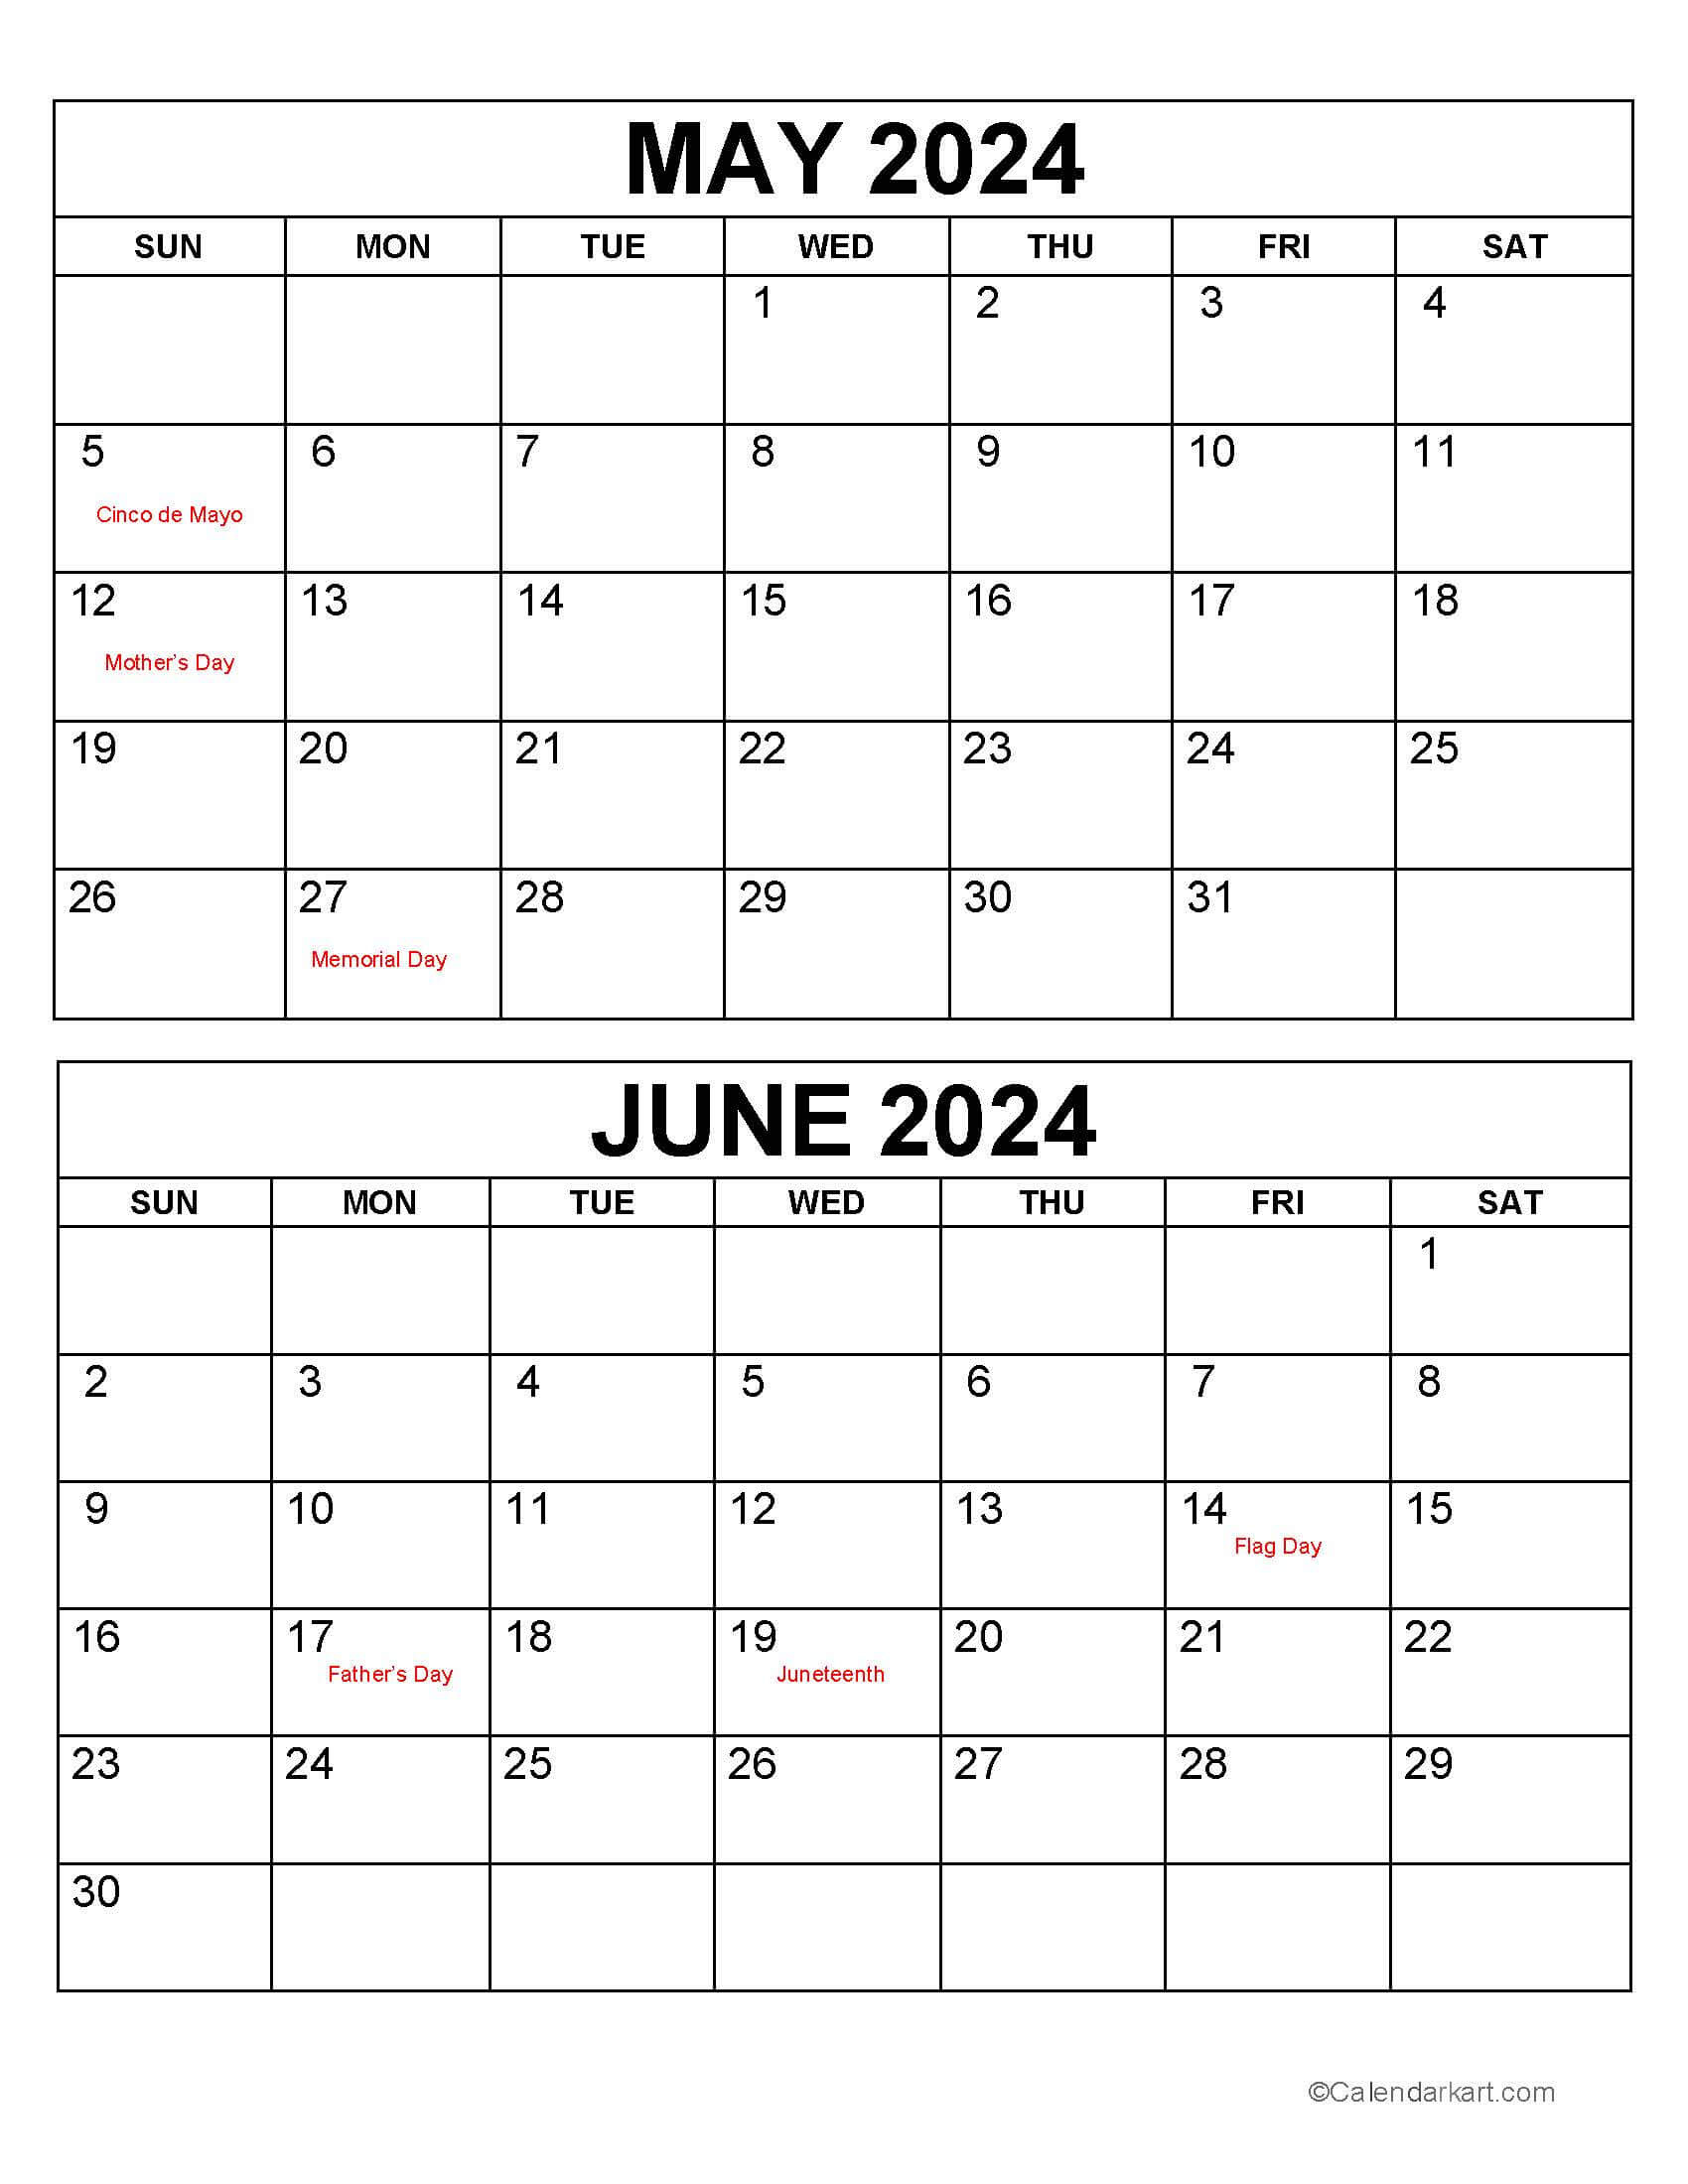 May June 2024 Calendars (3Rd Bi-Monthly) - Calendarkart inside 2024 Calendar May And June